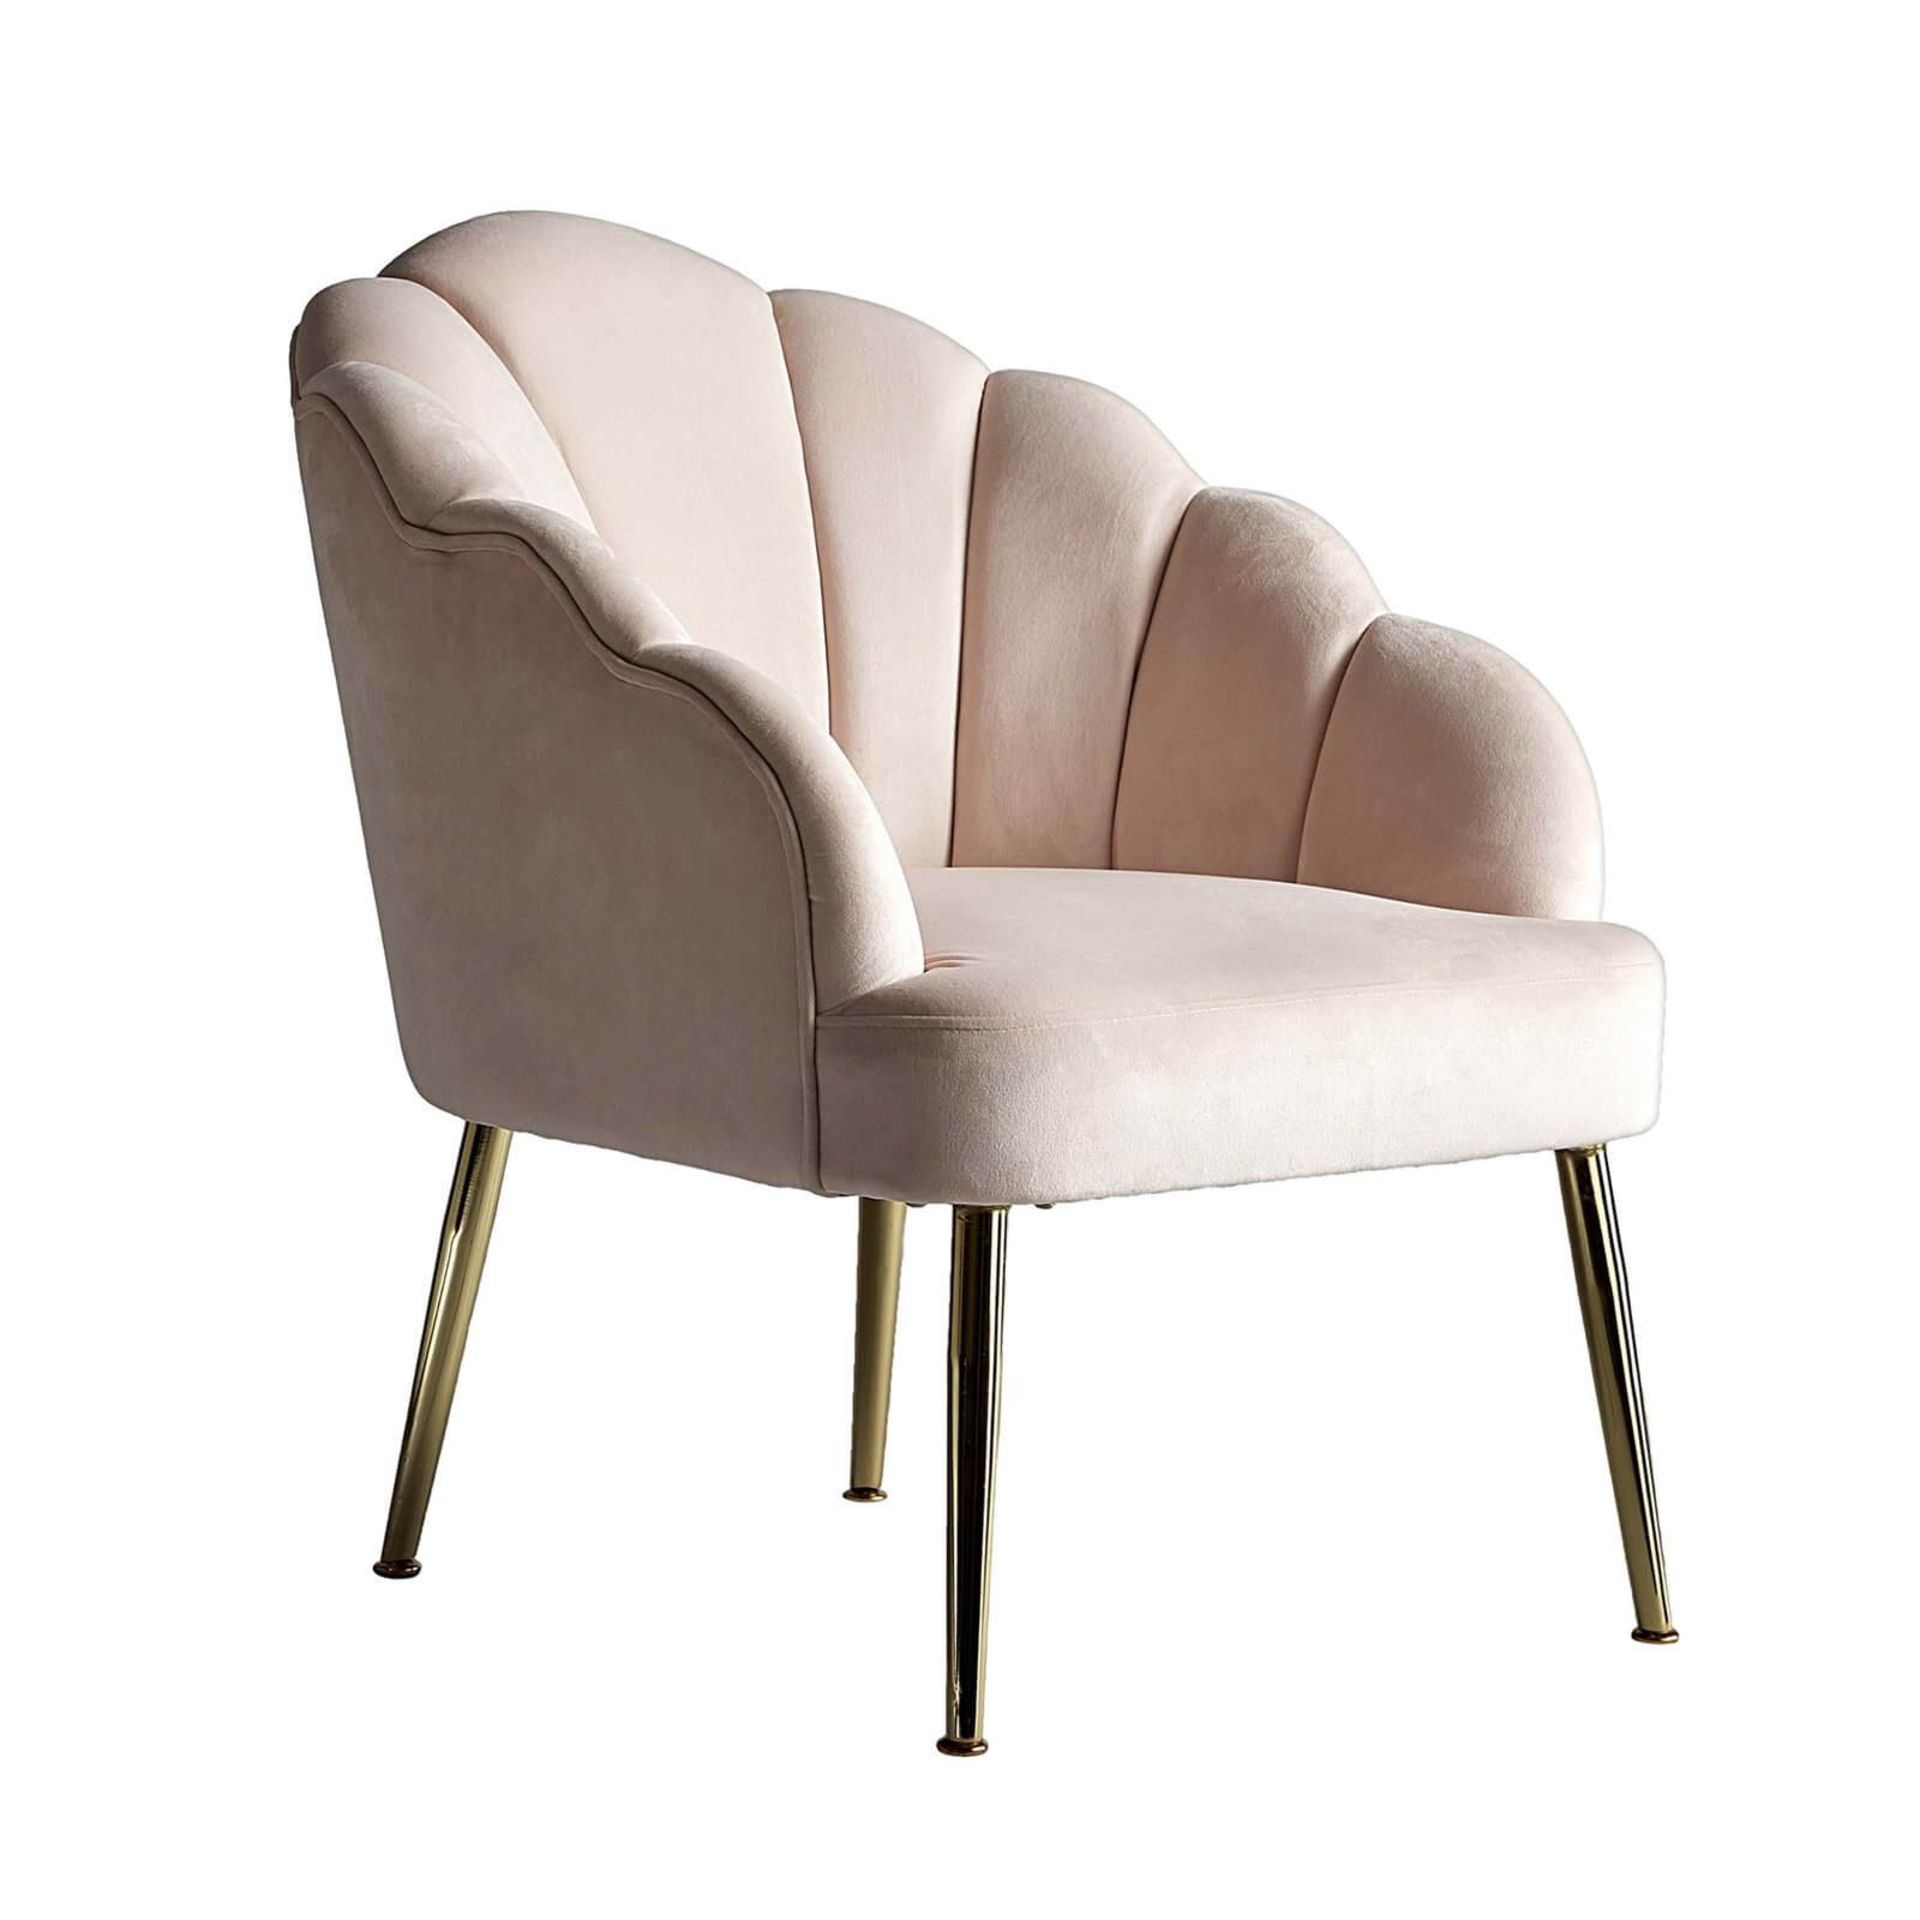 (R2P) 1 X Sophia Occasional Chair Blush. Velvet Fabric Cover. Metal Legs. (H77 x W64 x D71cm)